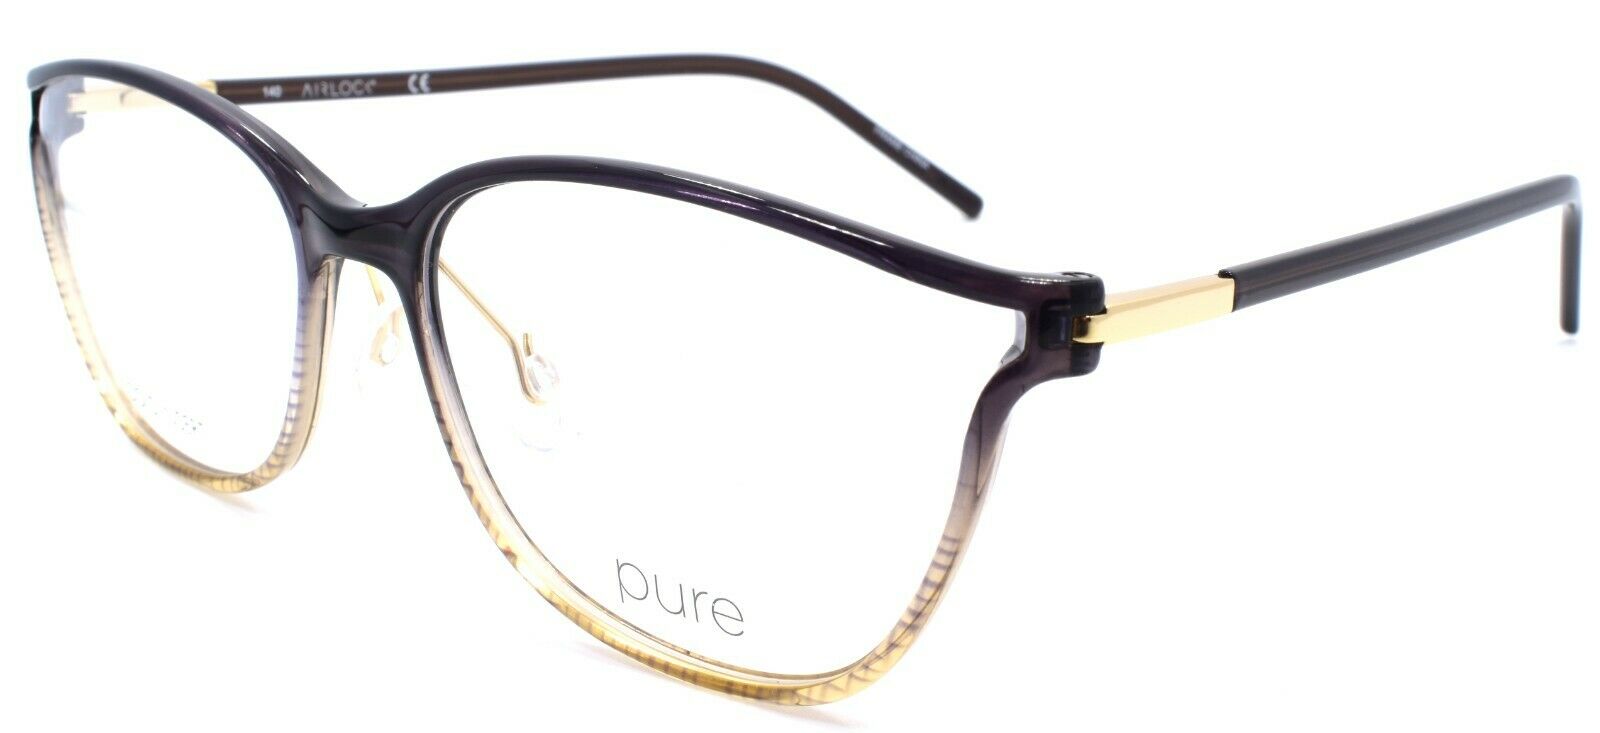 1-Marchon Airlock 3000 001 Women's Eyeglasses Frames 53-15-140 Black Gradient-886895394161-IKSpecs